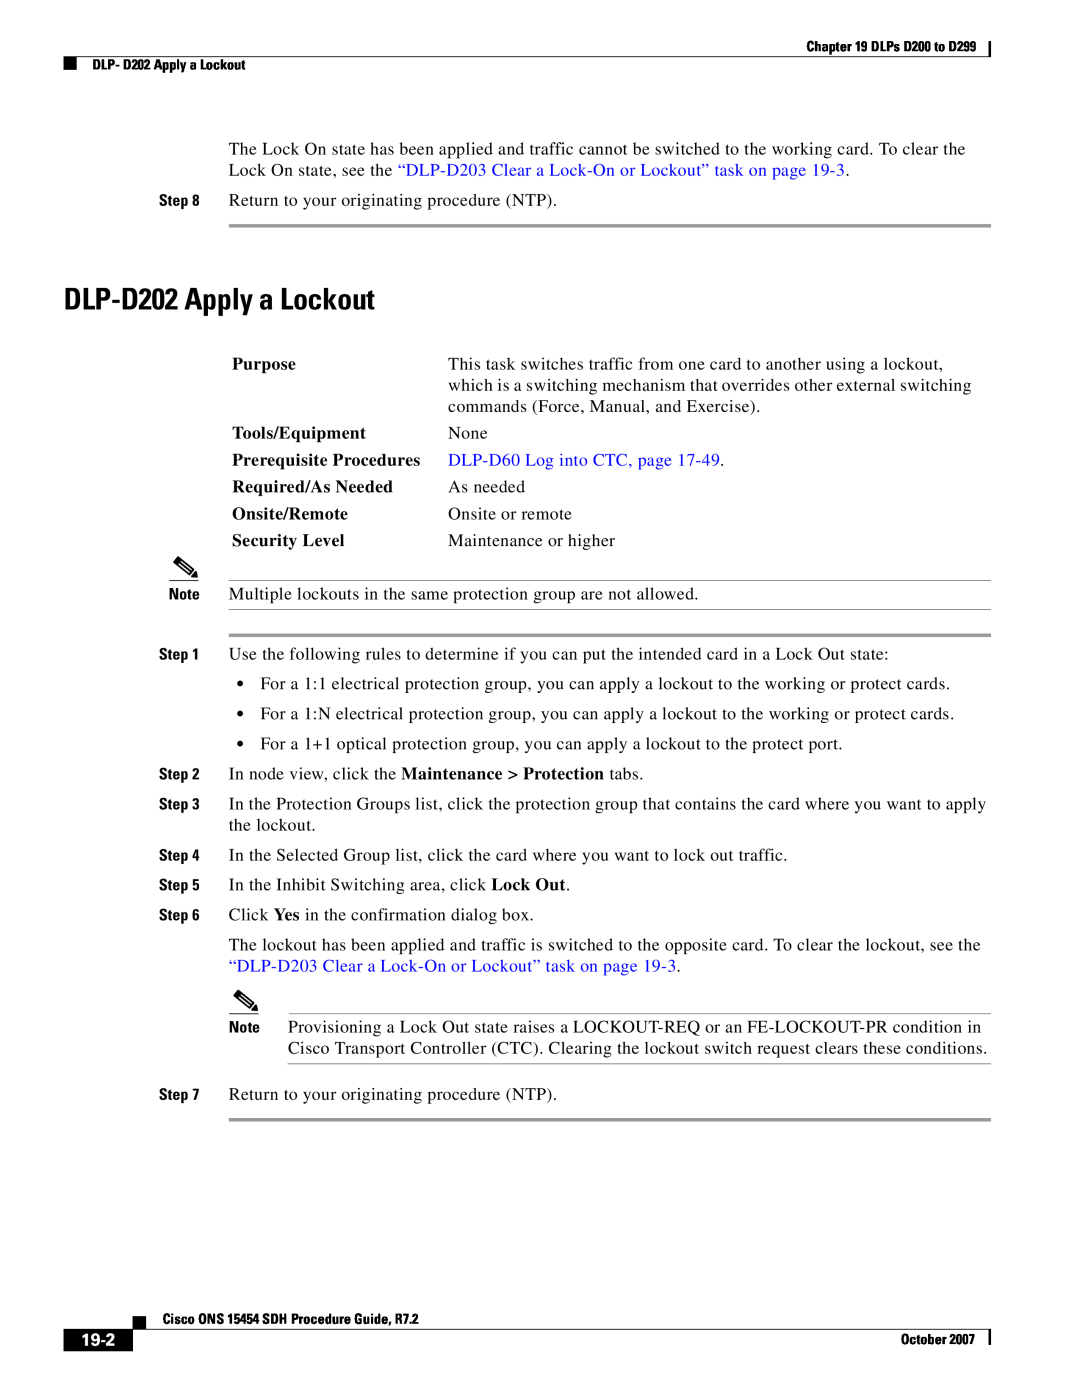 Cisco Systems D200 manual DLP-D202 Apply a Lockout, DLP-D60 Log into CTC, page, 19-2 